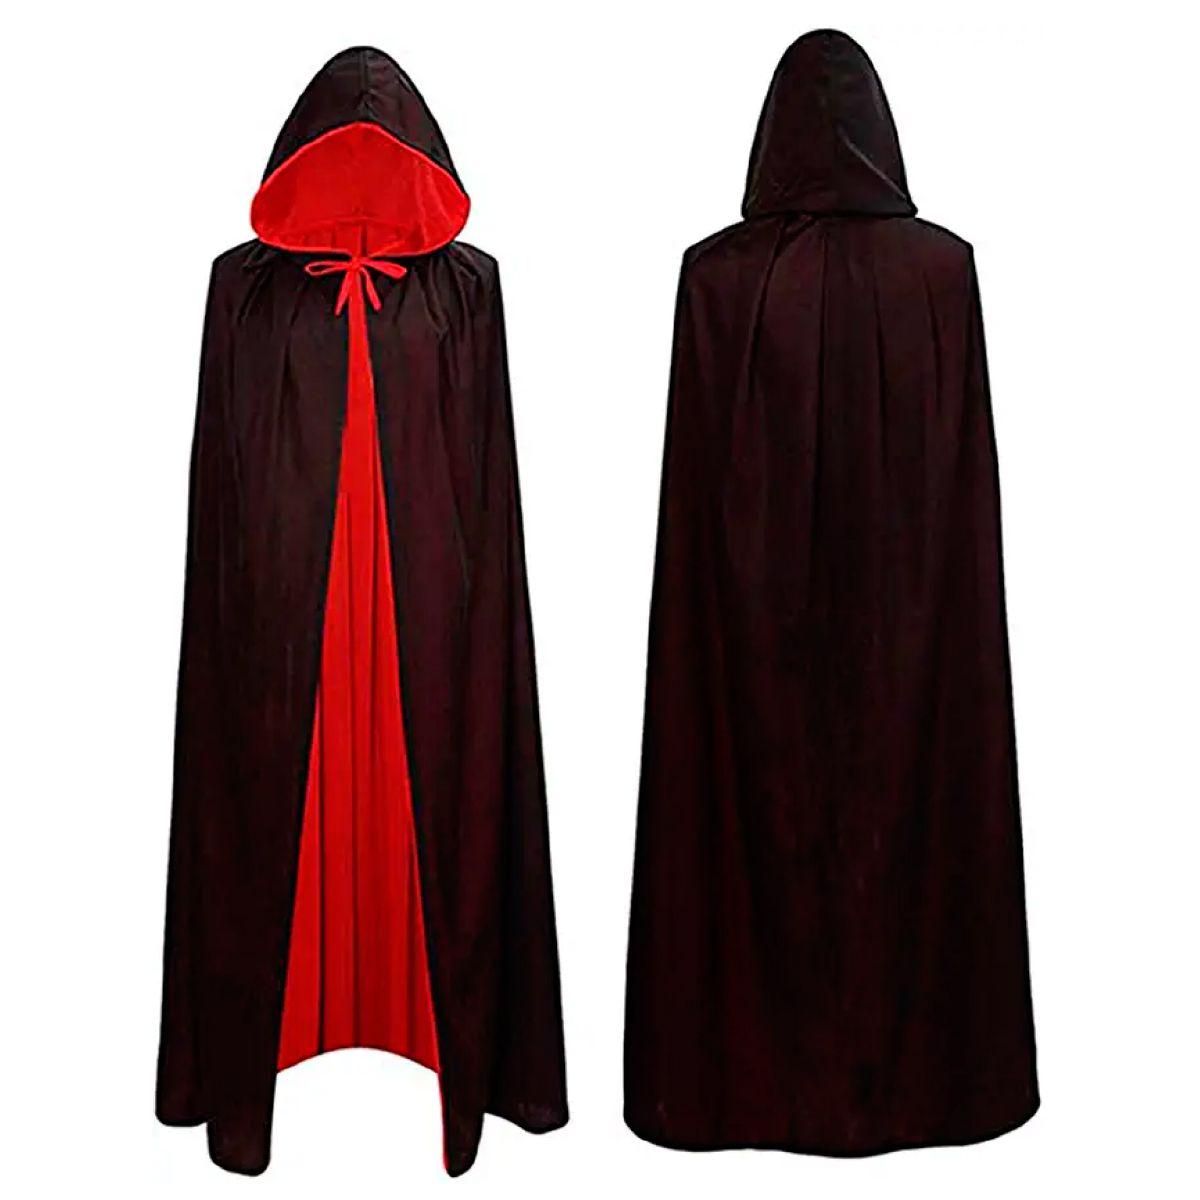 Fantasia infantil Halloween roupa Vampiro Dracula com capa